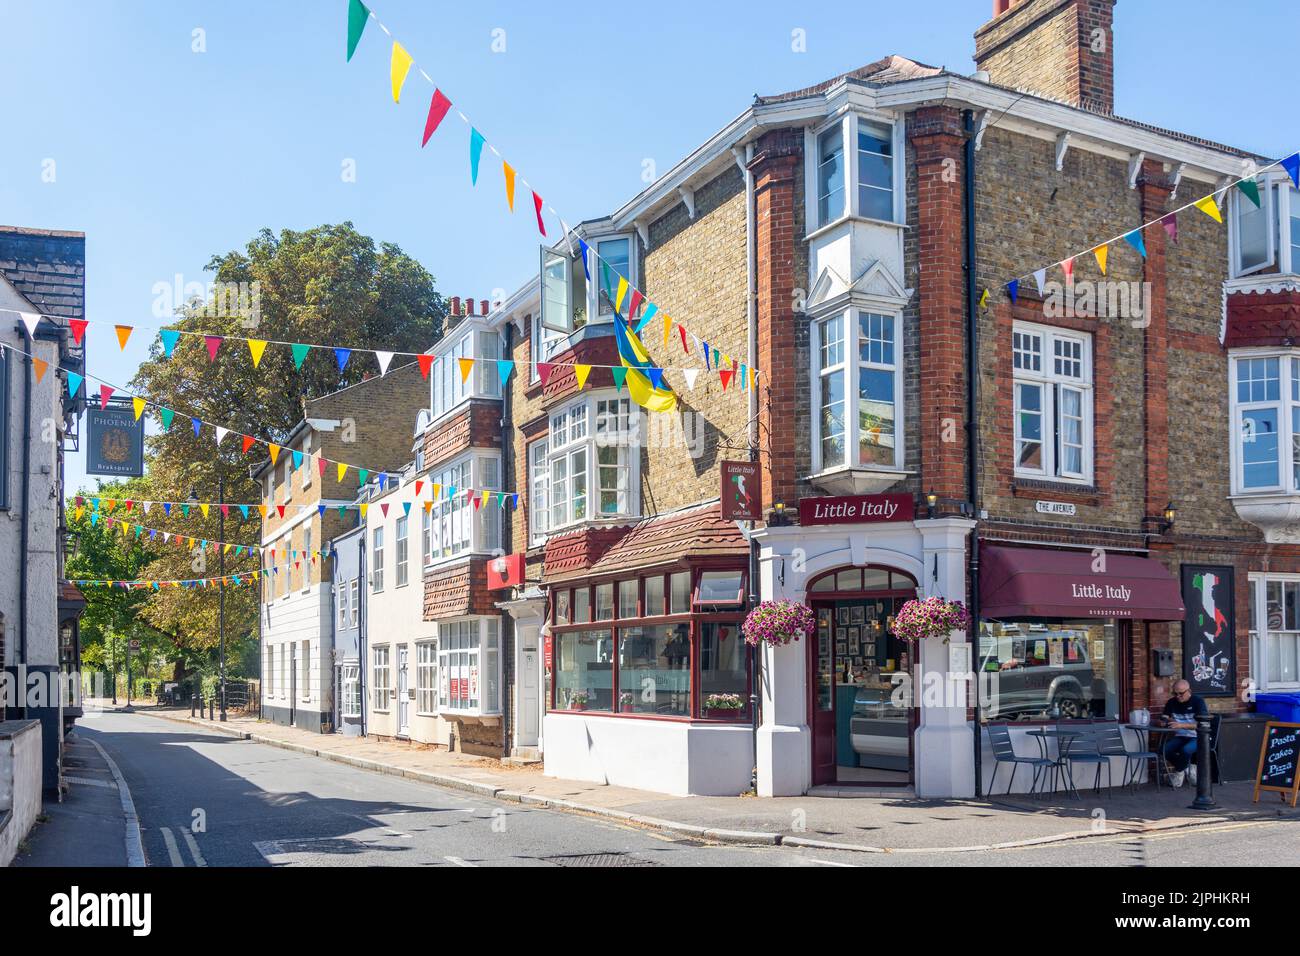 Little Italy Cafe & Deli, Thames Street, Sunbury-on-Thames, Surrey, Inglaterra, Reino Unido Foto de stock